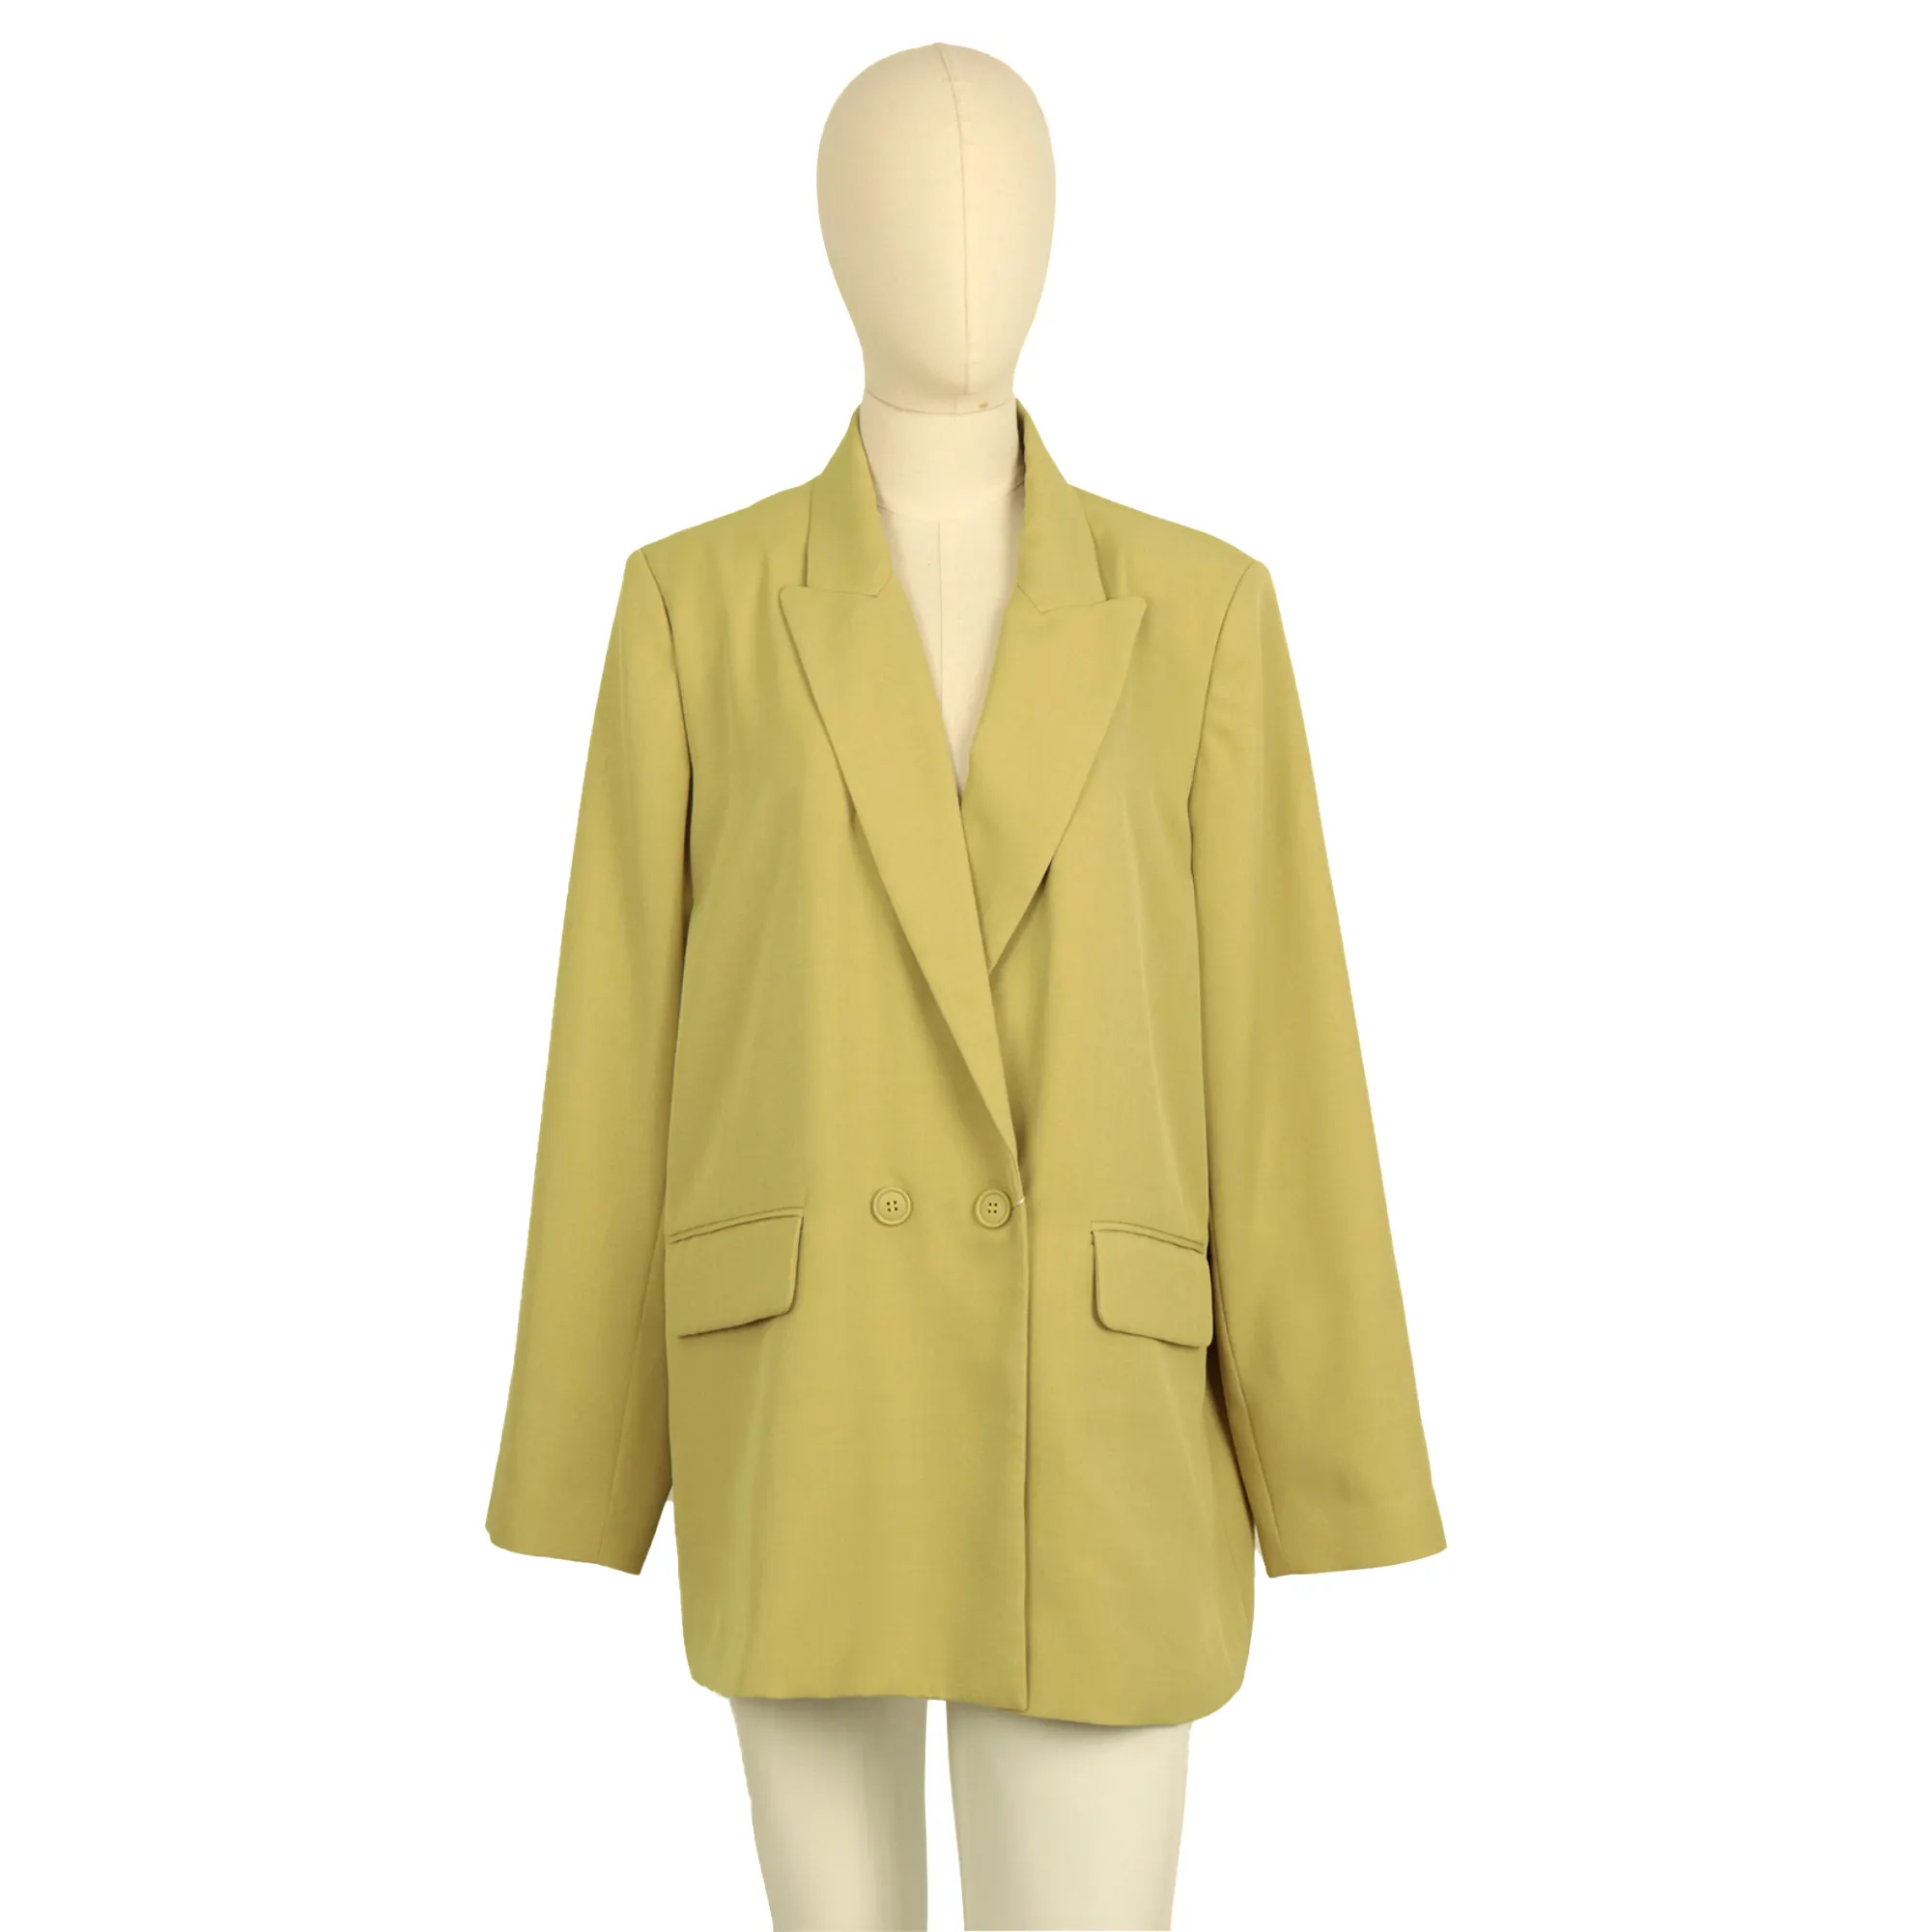 Alphan Spring Fashion Blazer Jacket Women Casual Collar Pockets Long Sleeve Work Suit Coats Office Lady Solid Blaze